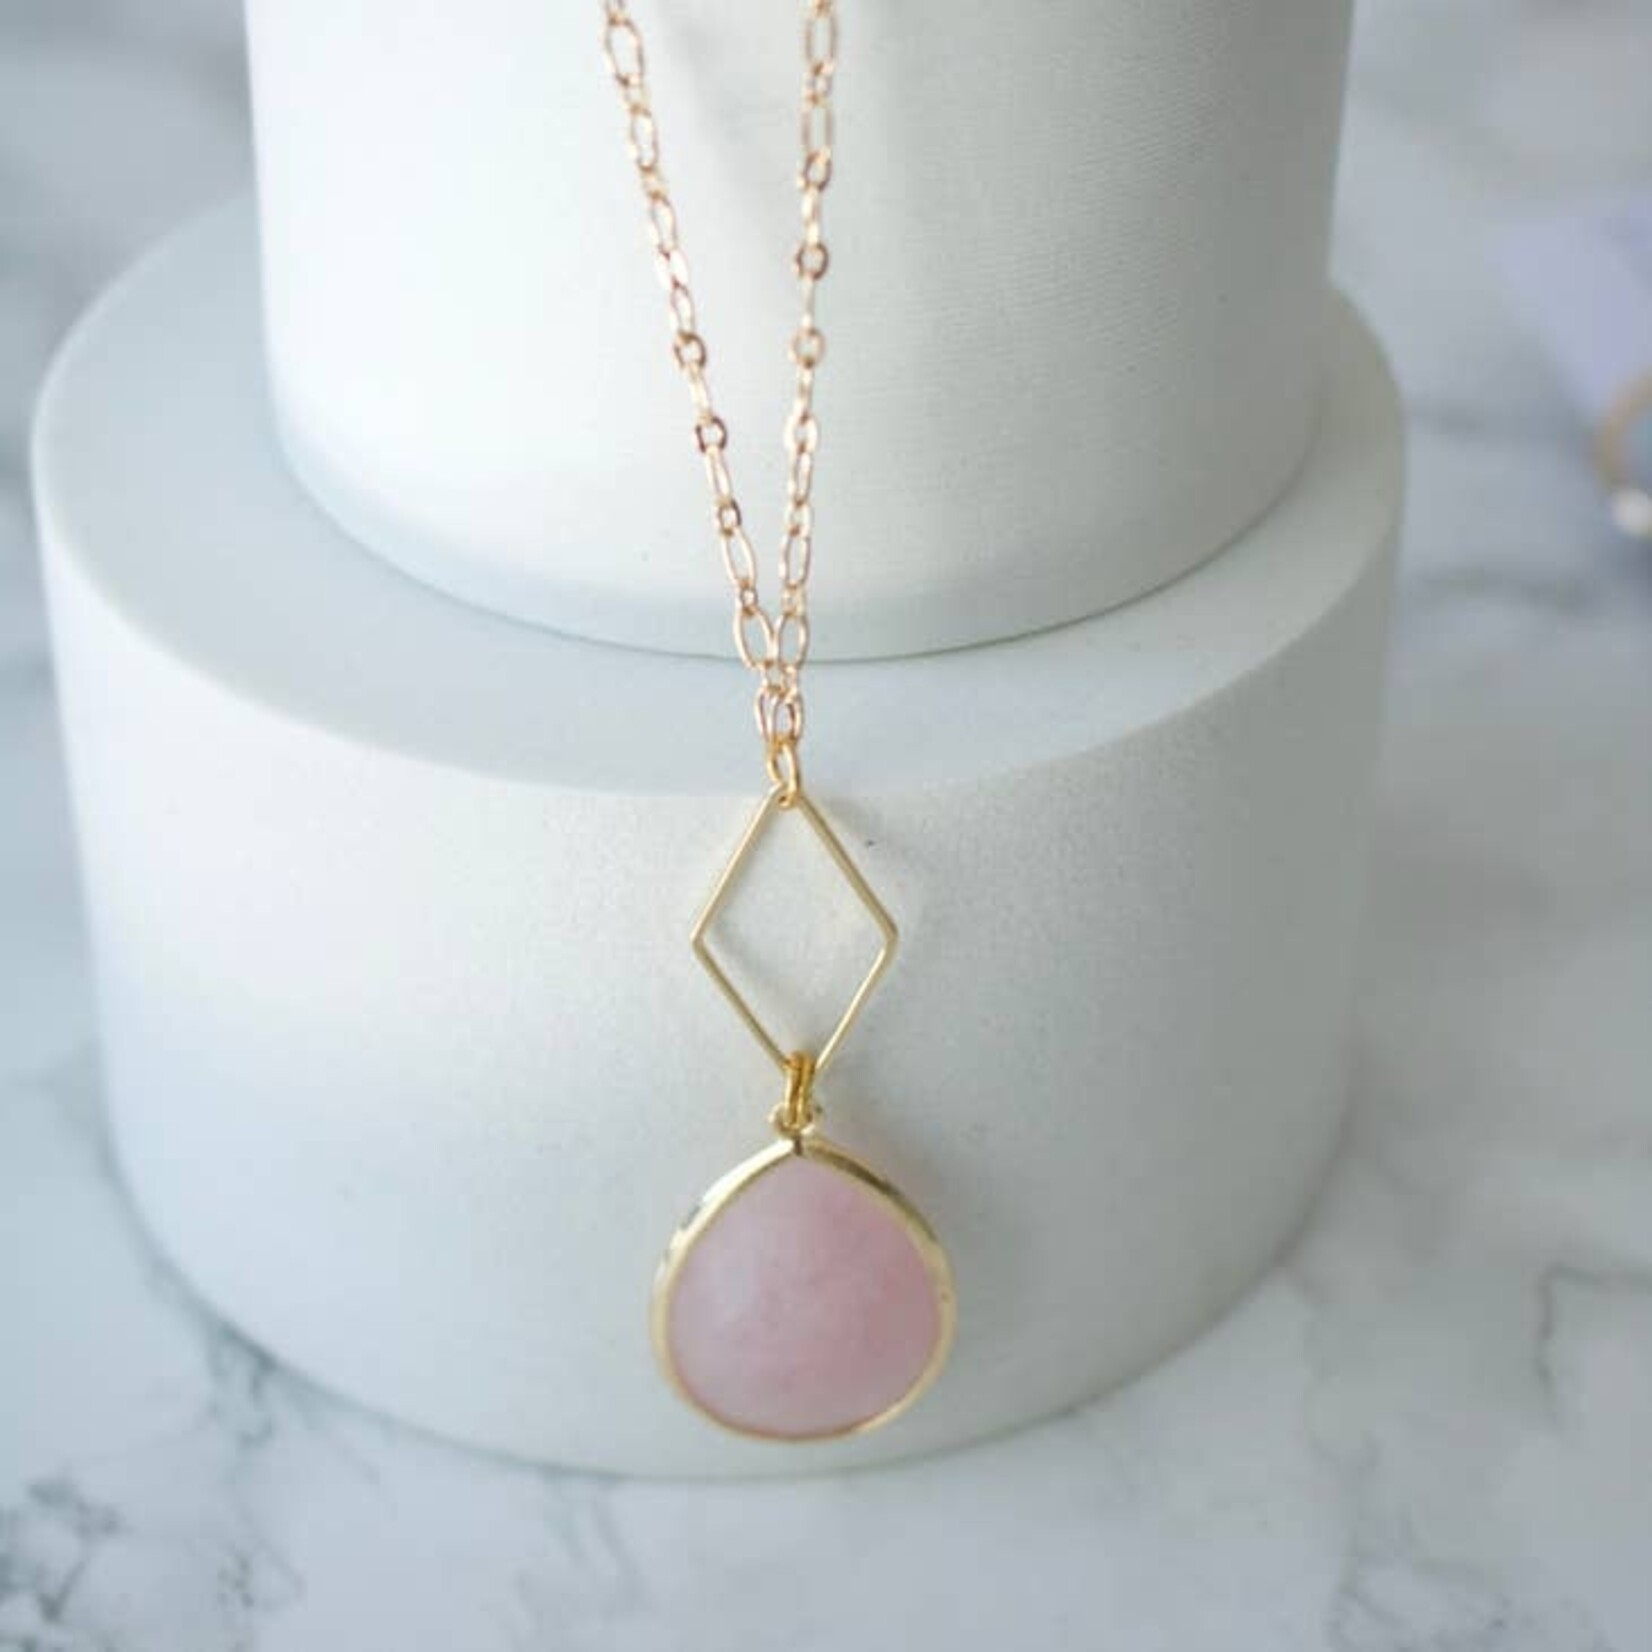 Necklace Gold Diamond w Rose Quartz Teardrop